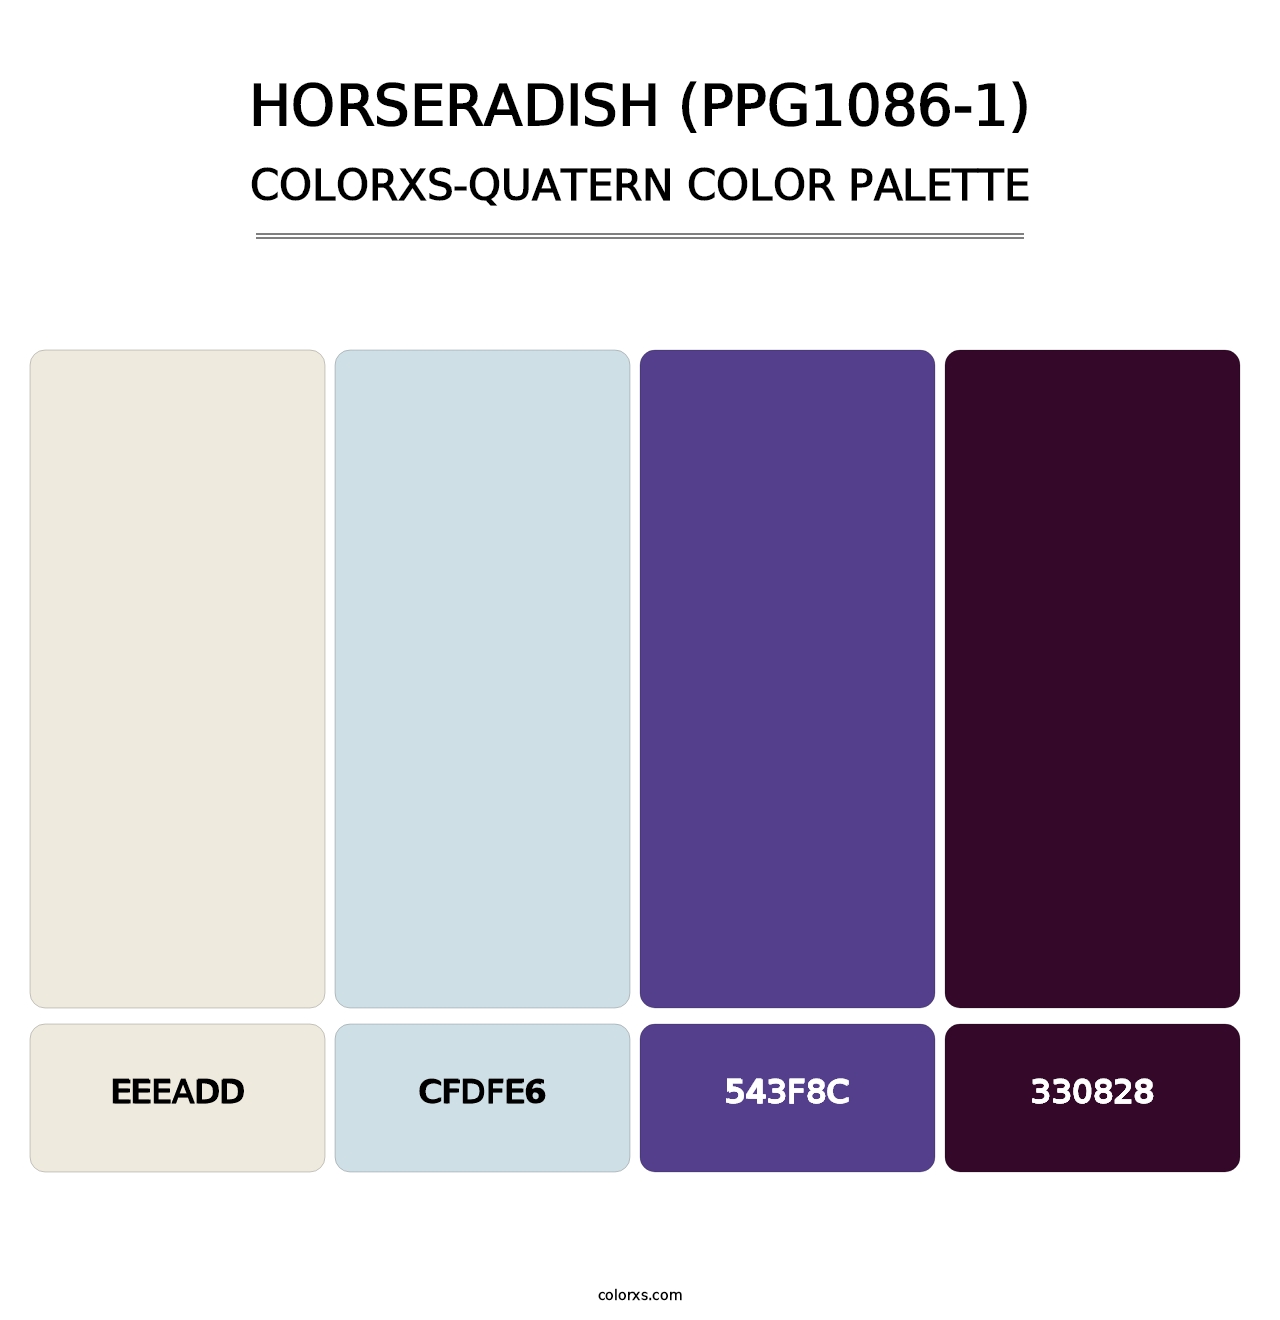 Horseradish (PPG1086-1) - Colorxs Quatern Palette